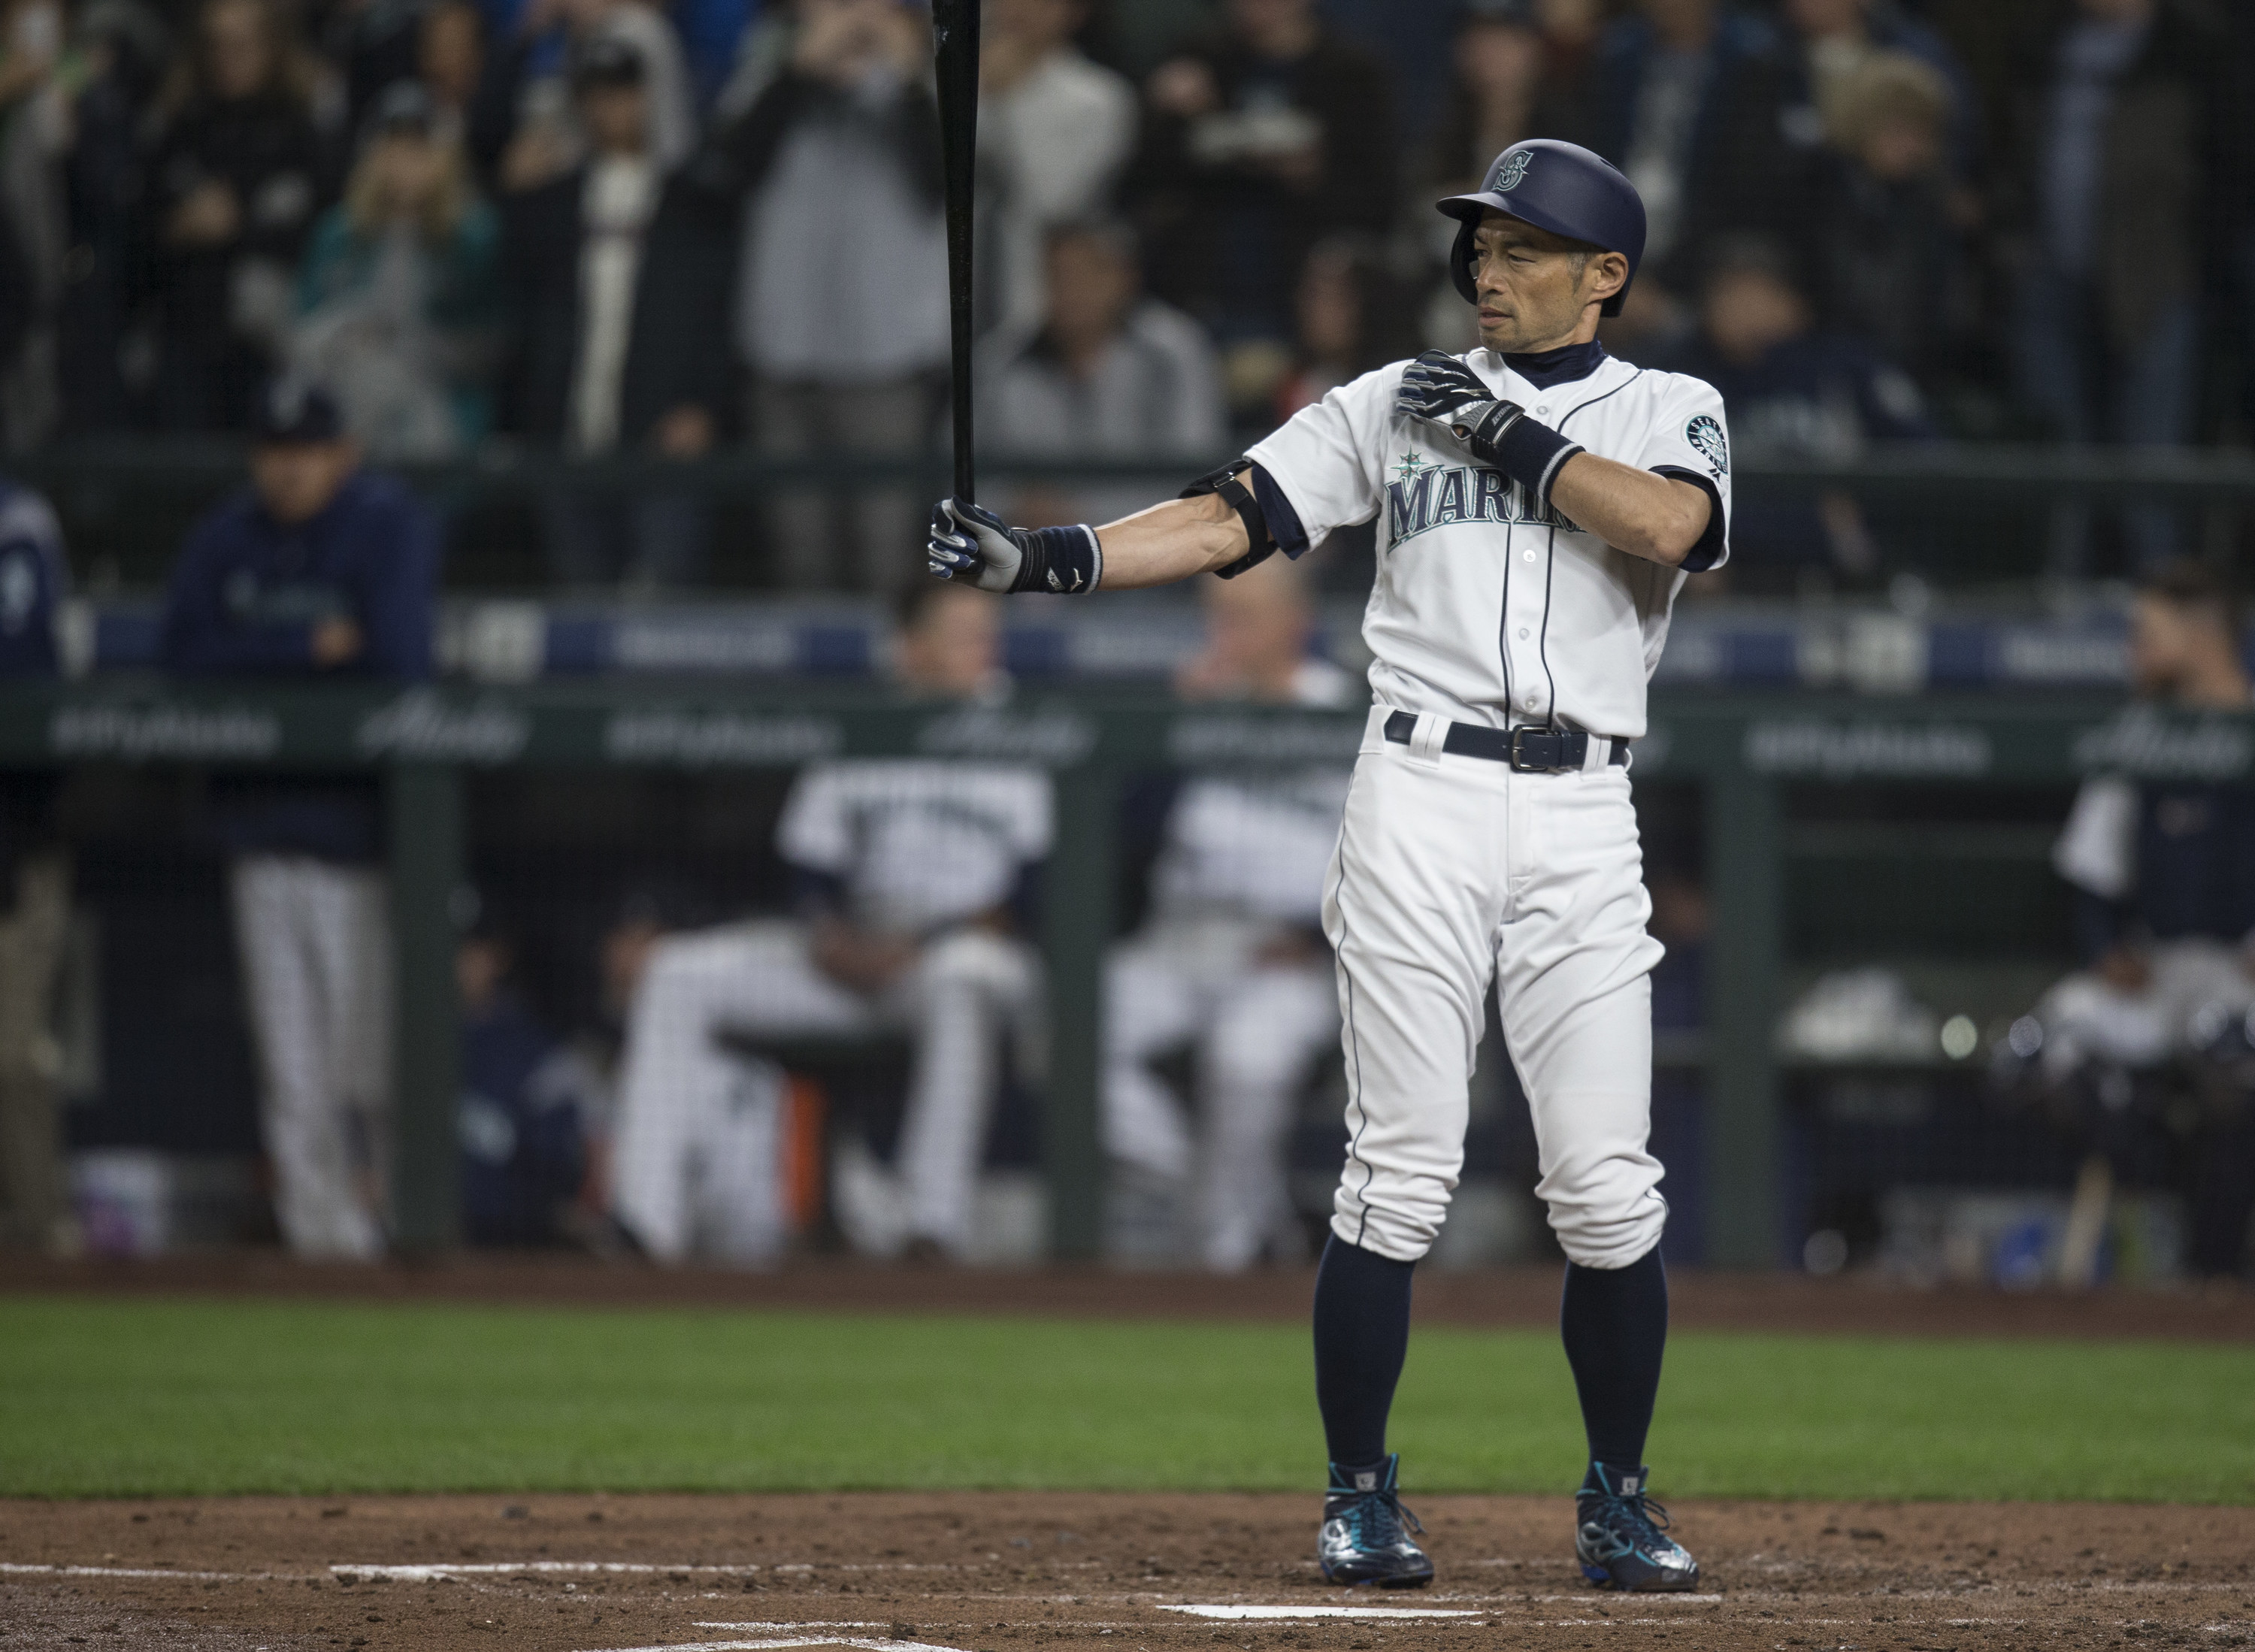 Ichiro Suzuki holding a baseball bat and waiting for the pitch